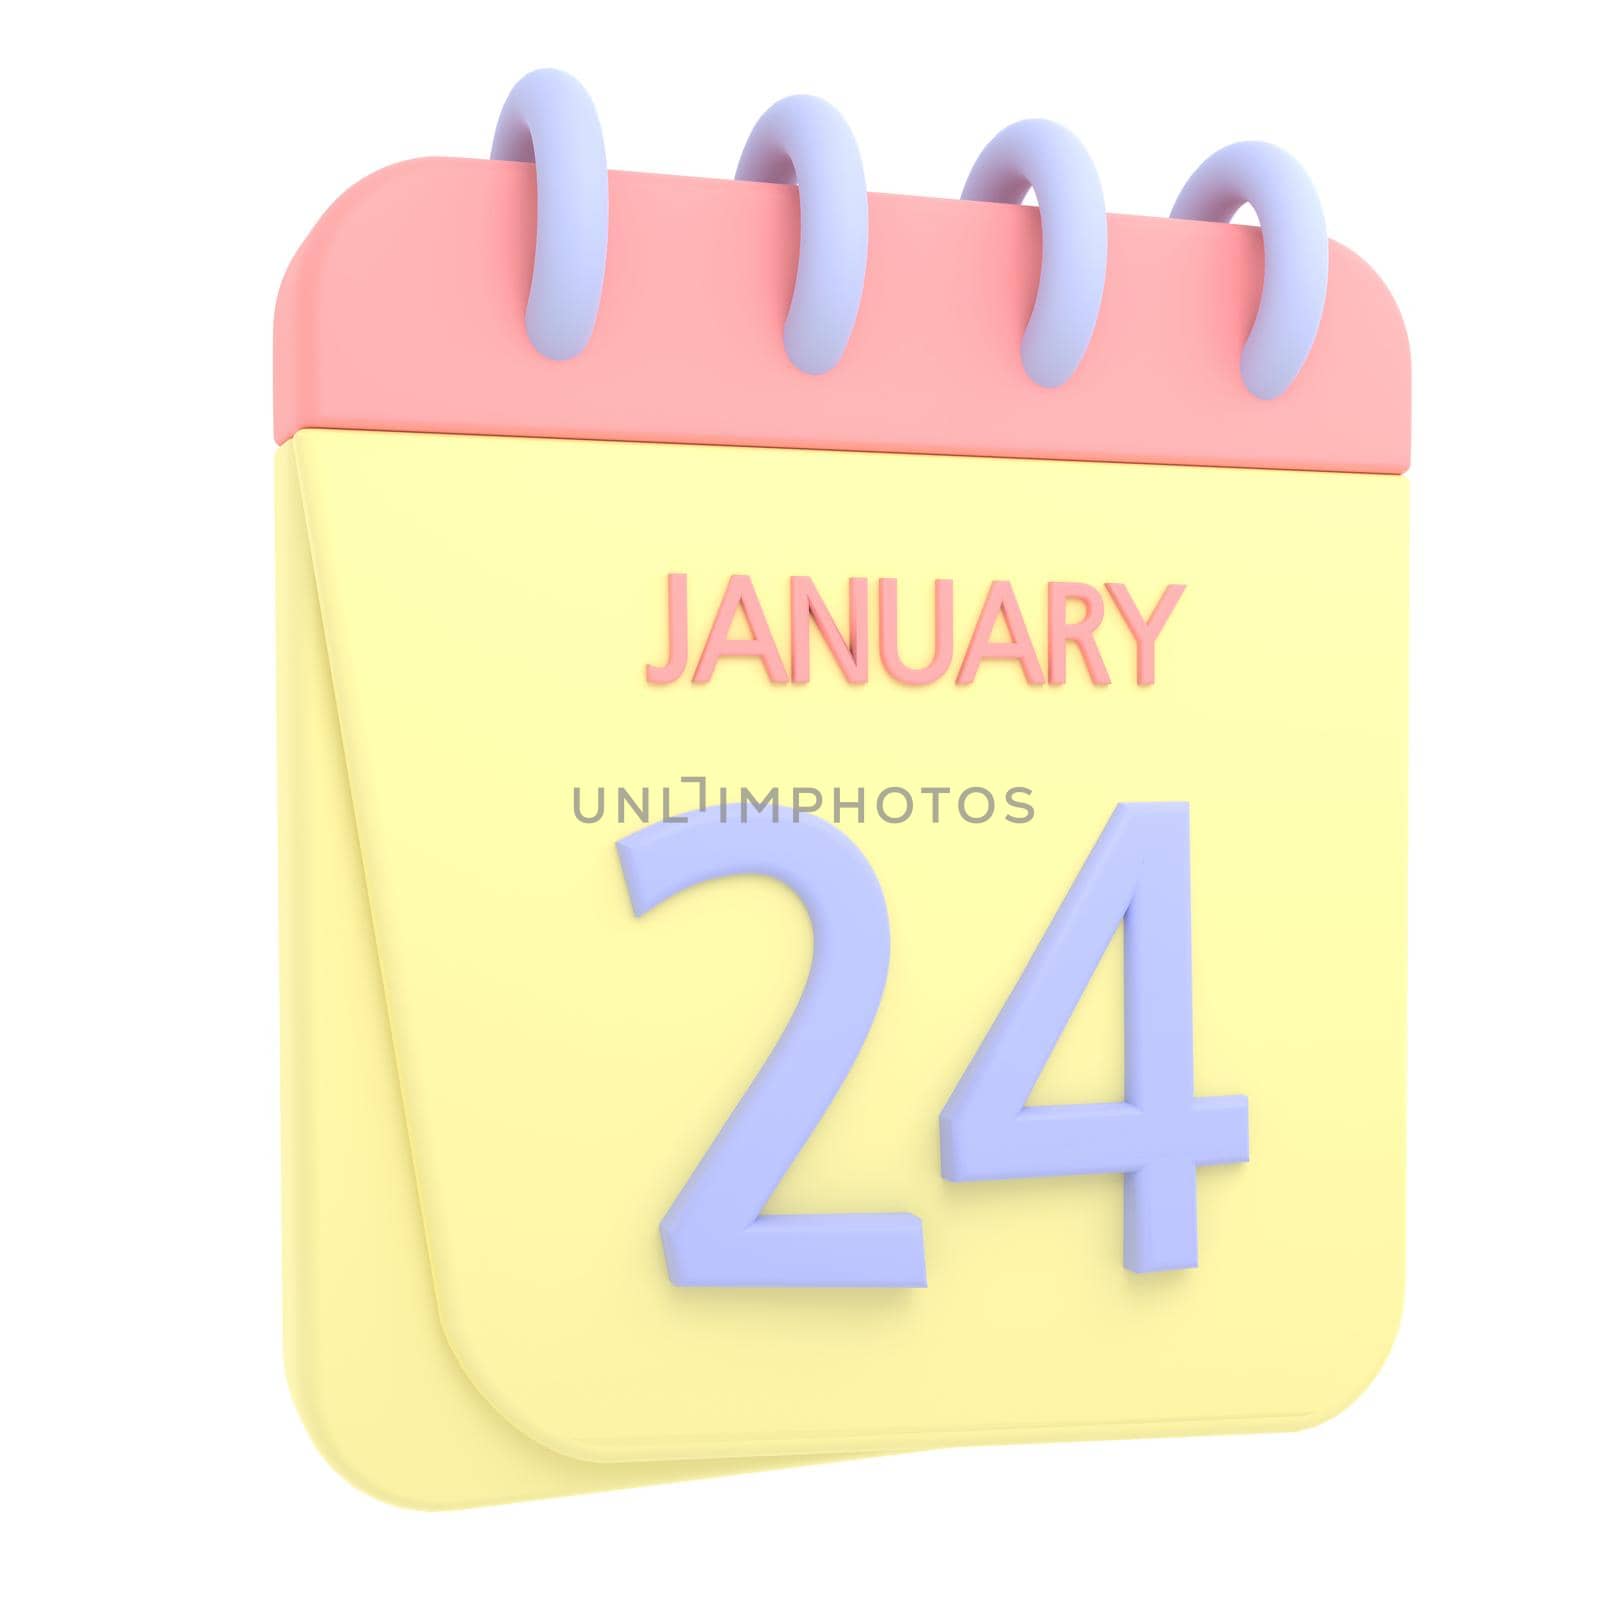 24th January 3D calendar icon by AnnaMarin